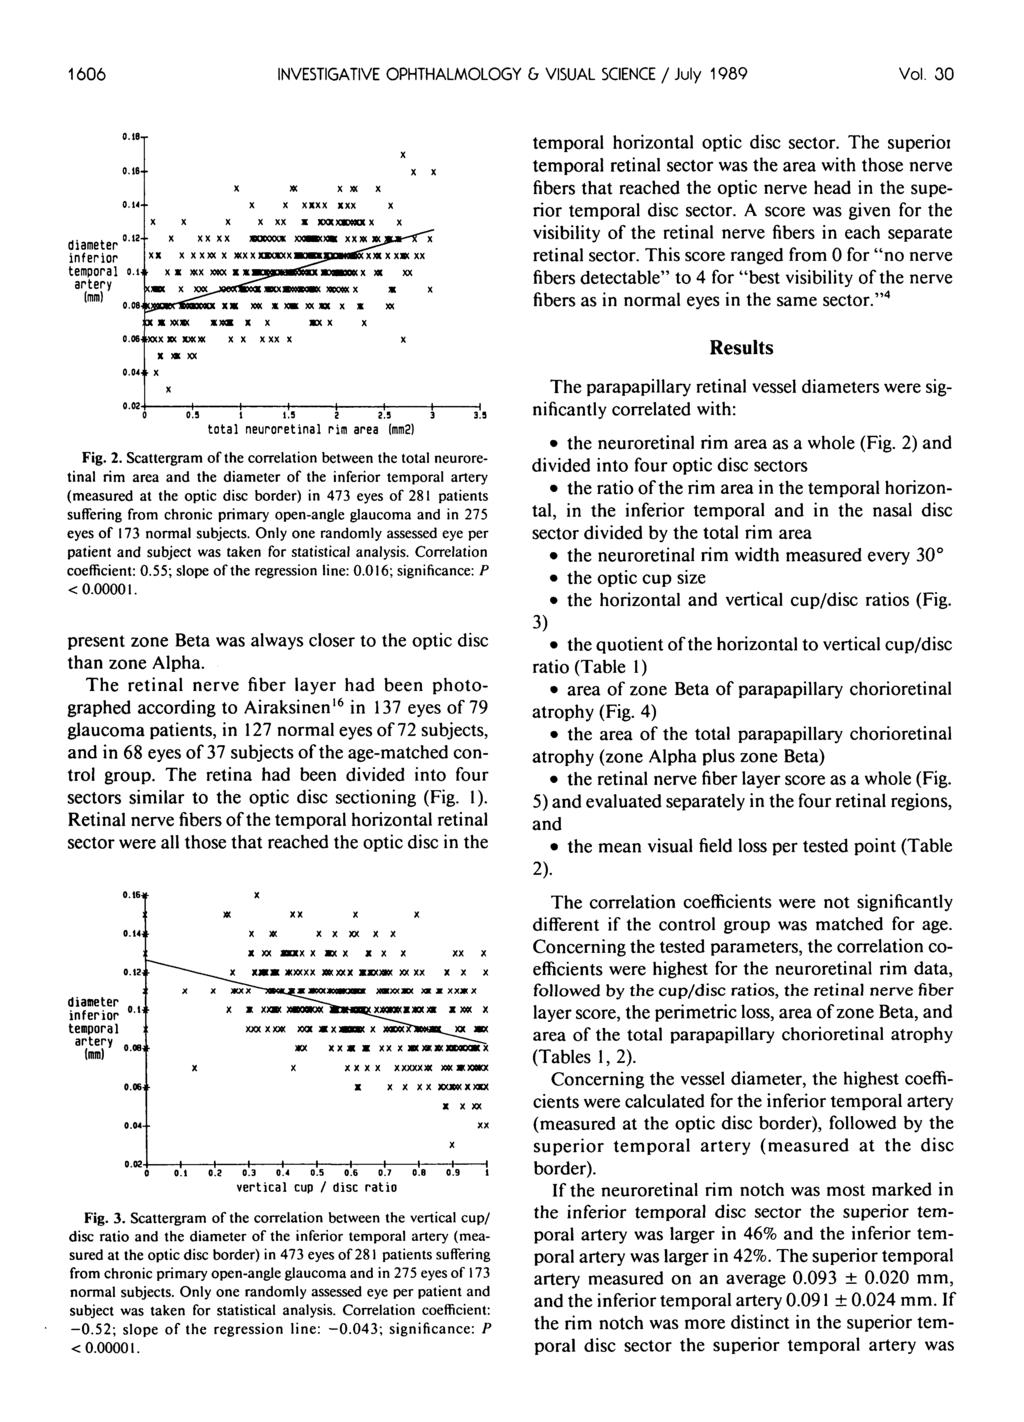 1606 INVESTIGATIVE OPHTHALMOLOGY & VISUAL SCIENCE / July 1989 Vol. 30 o.ie-t- 0.16" 0.14- diameter inferior temporal o.m xx xxxnii artery (mm) CBCK K ^ K OOOOOK nil HUM OK) «M 0.